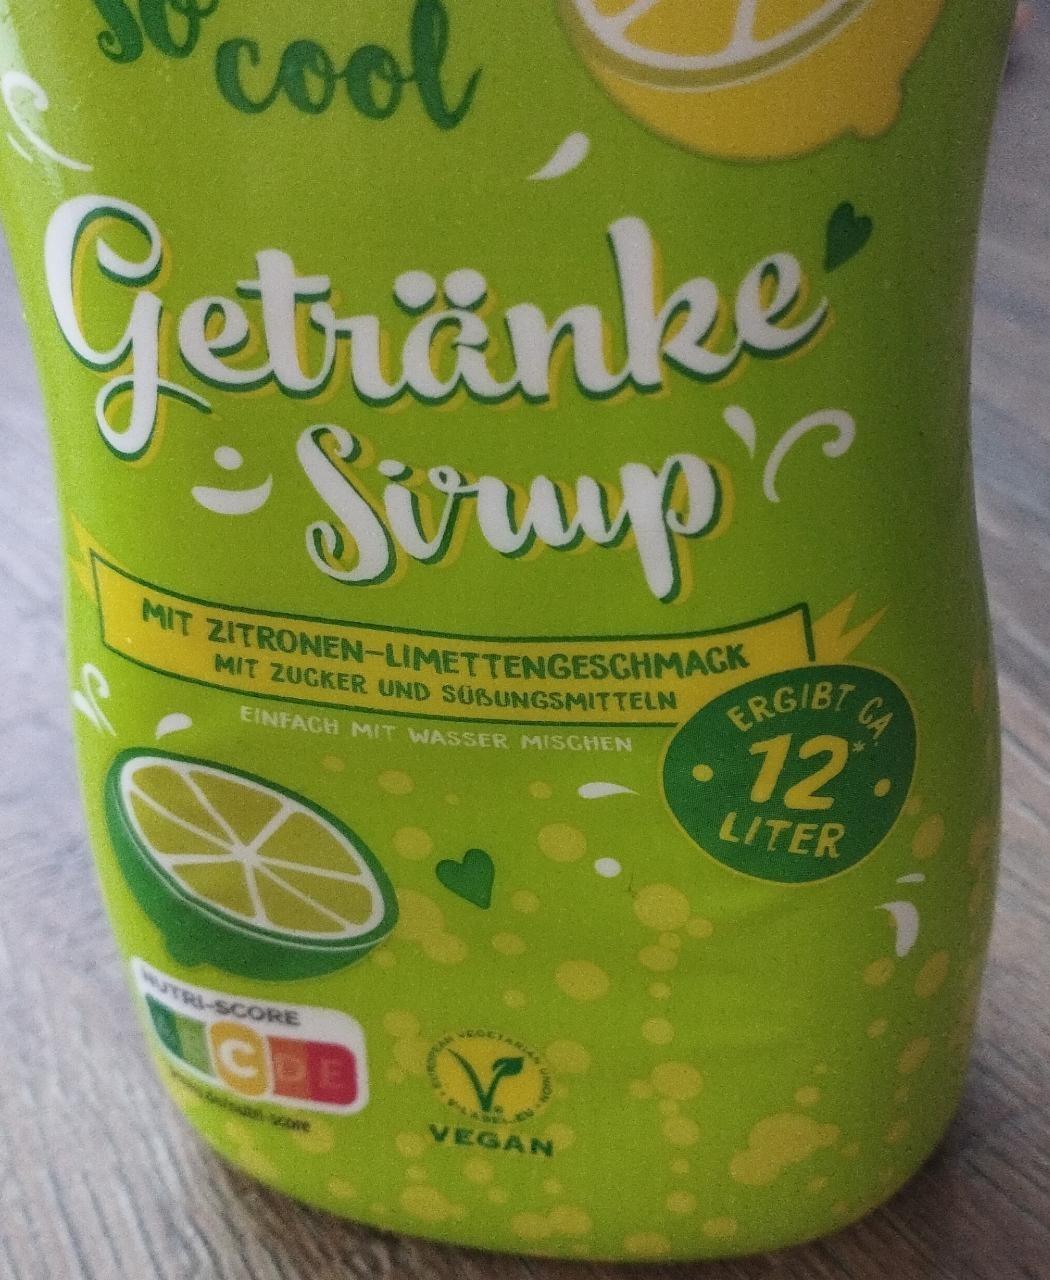 Fotografie - Getränke Sirup mit Zitronen-Limettengeschmack Penny